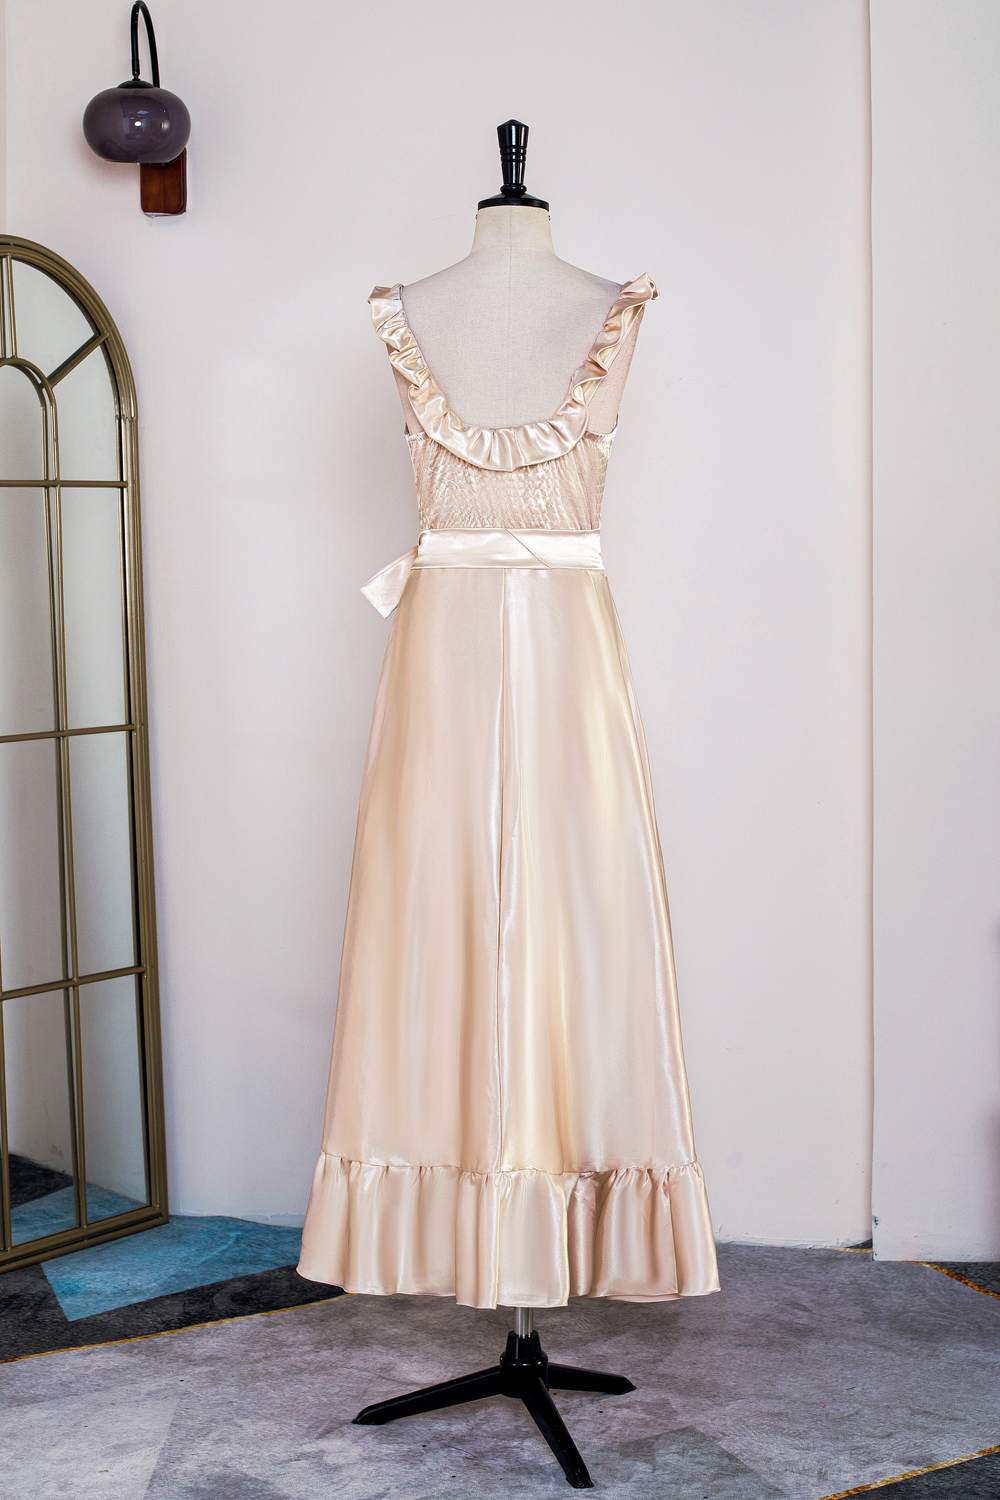 Homecomming Dress Vintage, Champagne Sleeveless Ruffled A-line Tea-Length Bridesmaid Dress with Sash